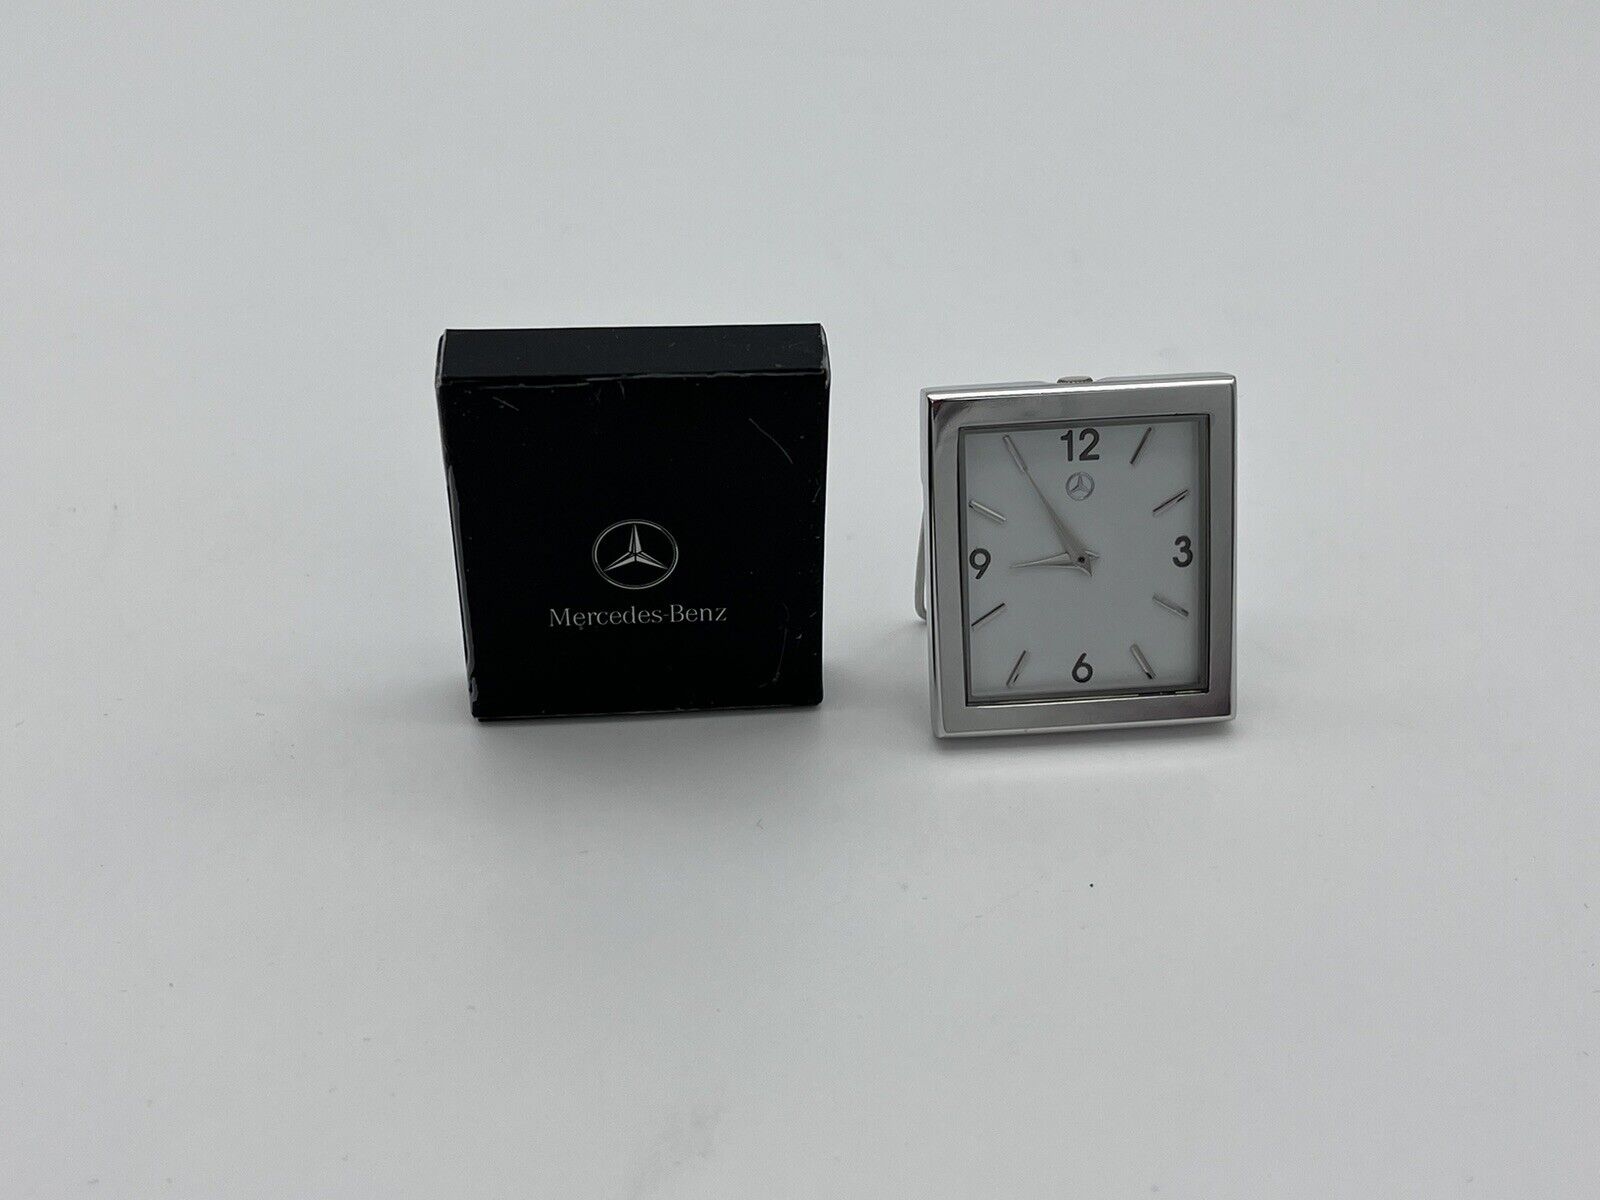 Mercedes Benz E-Class In-Dash Shaped Analogue Desk Clock New Working